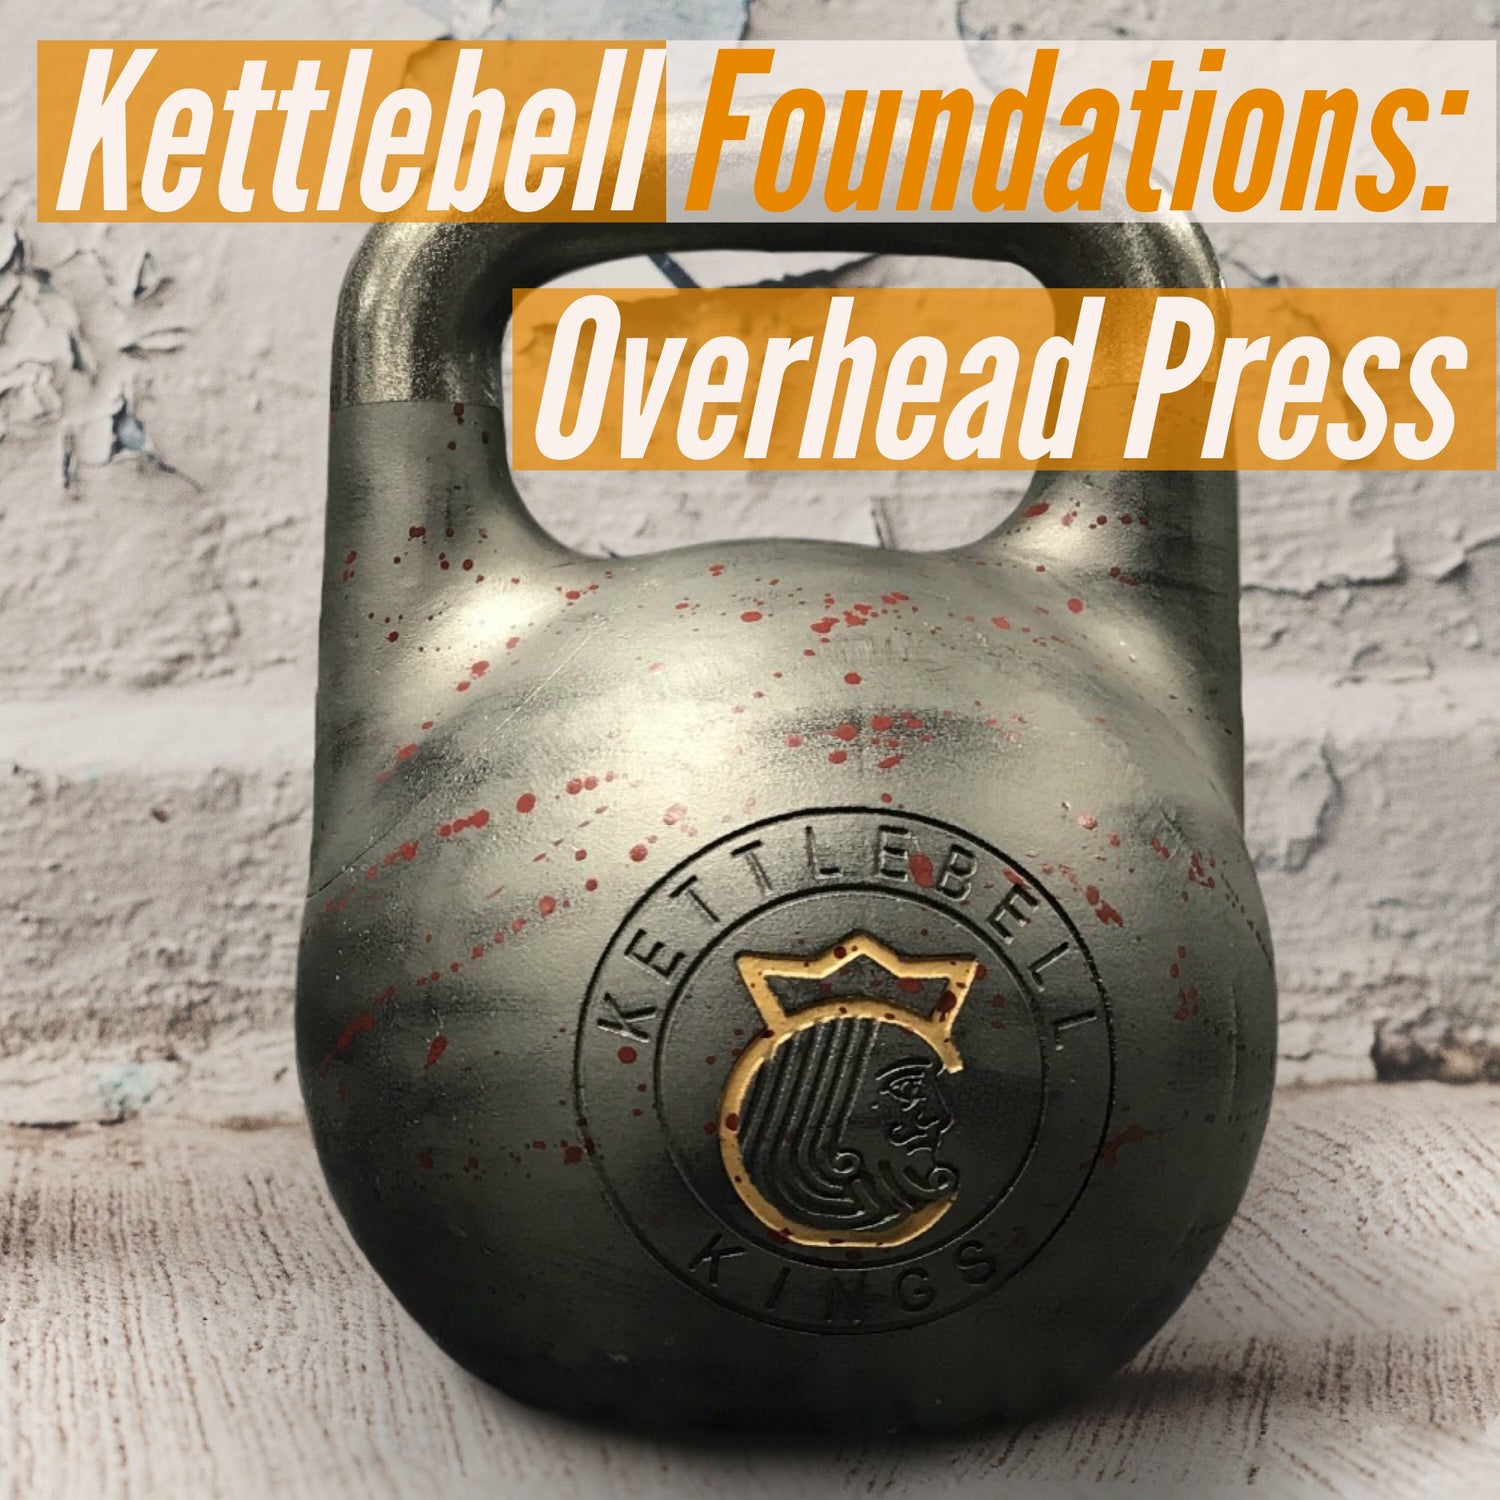 Kettlebell Foundations:  Overhead Press